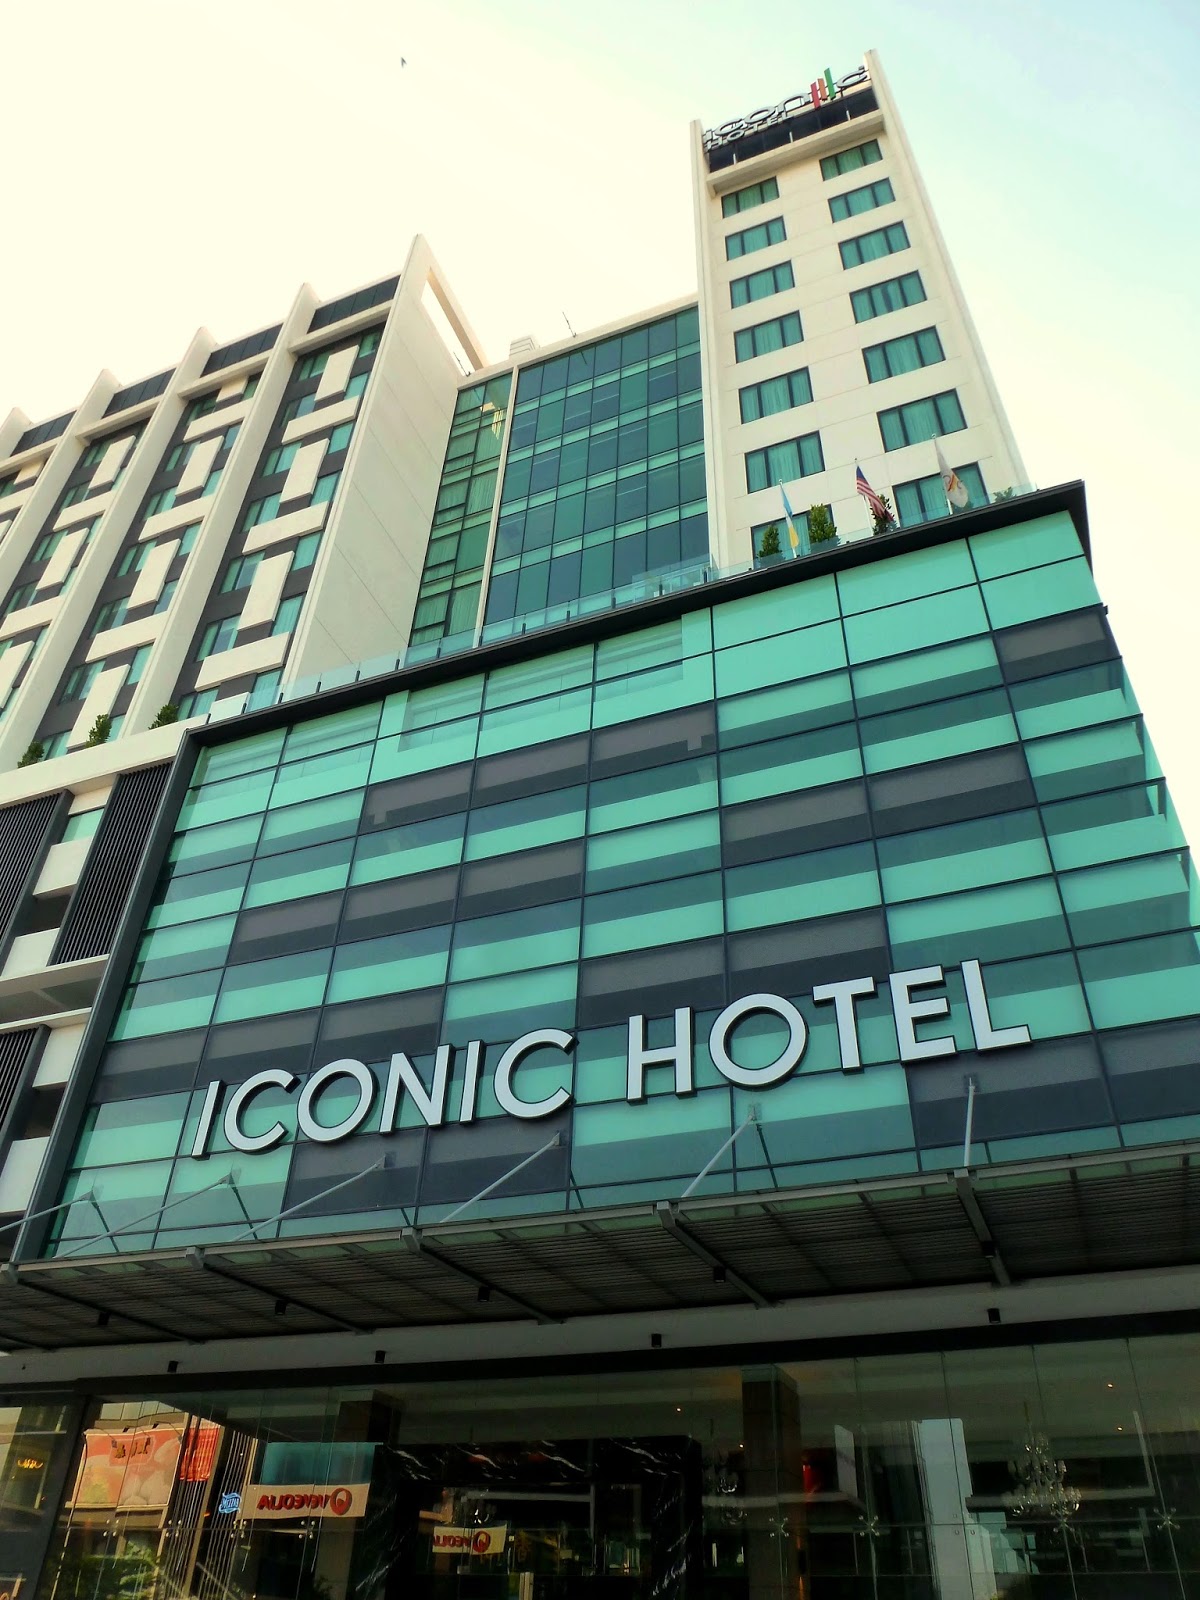 Iconic hotel